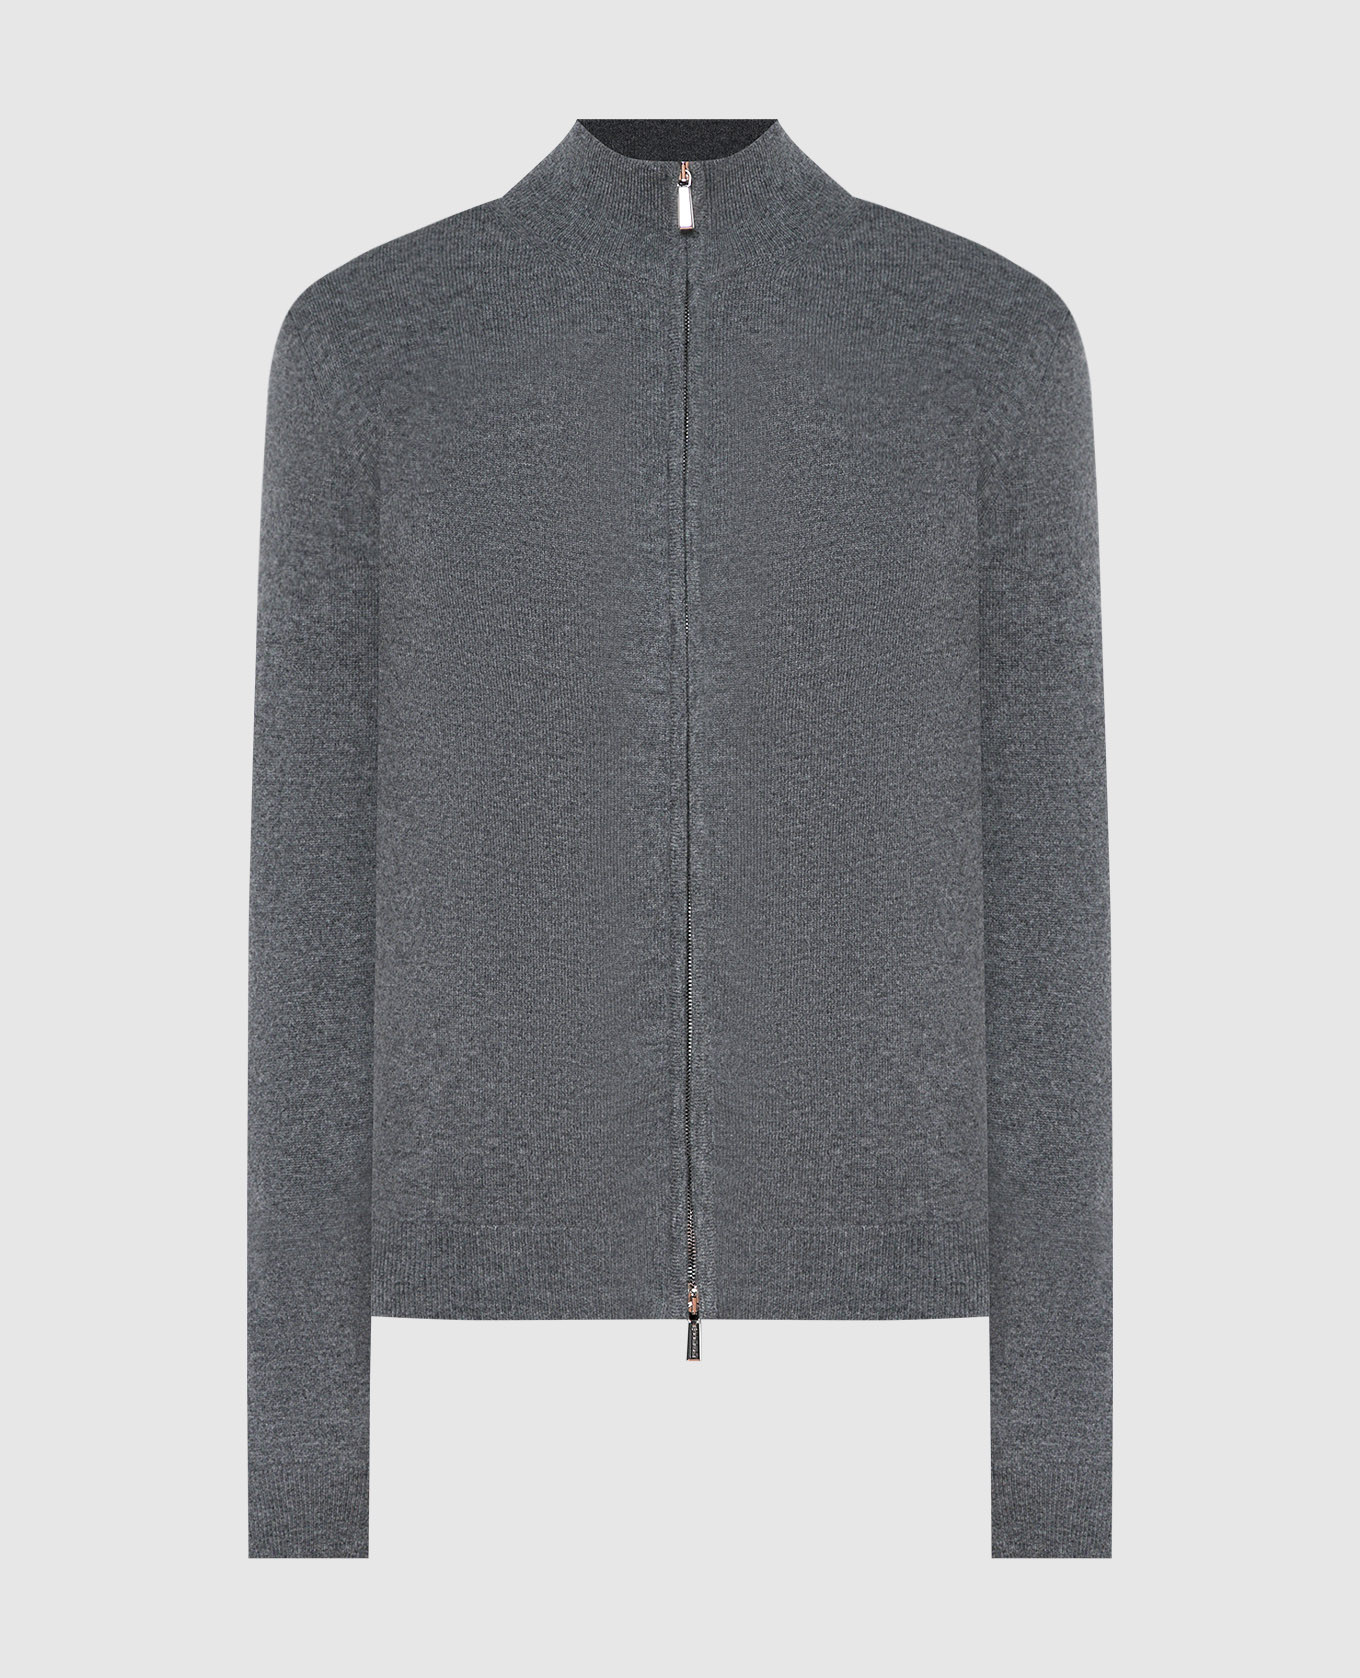 Urbino-WSK gray cashmere cardigan